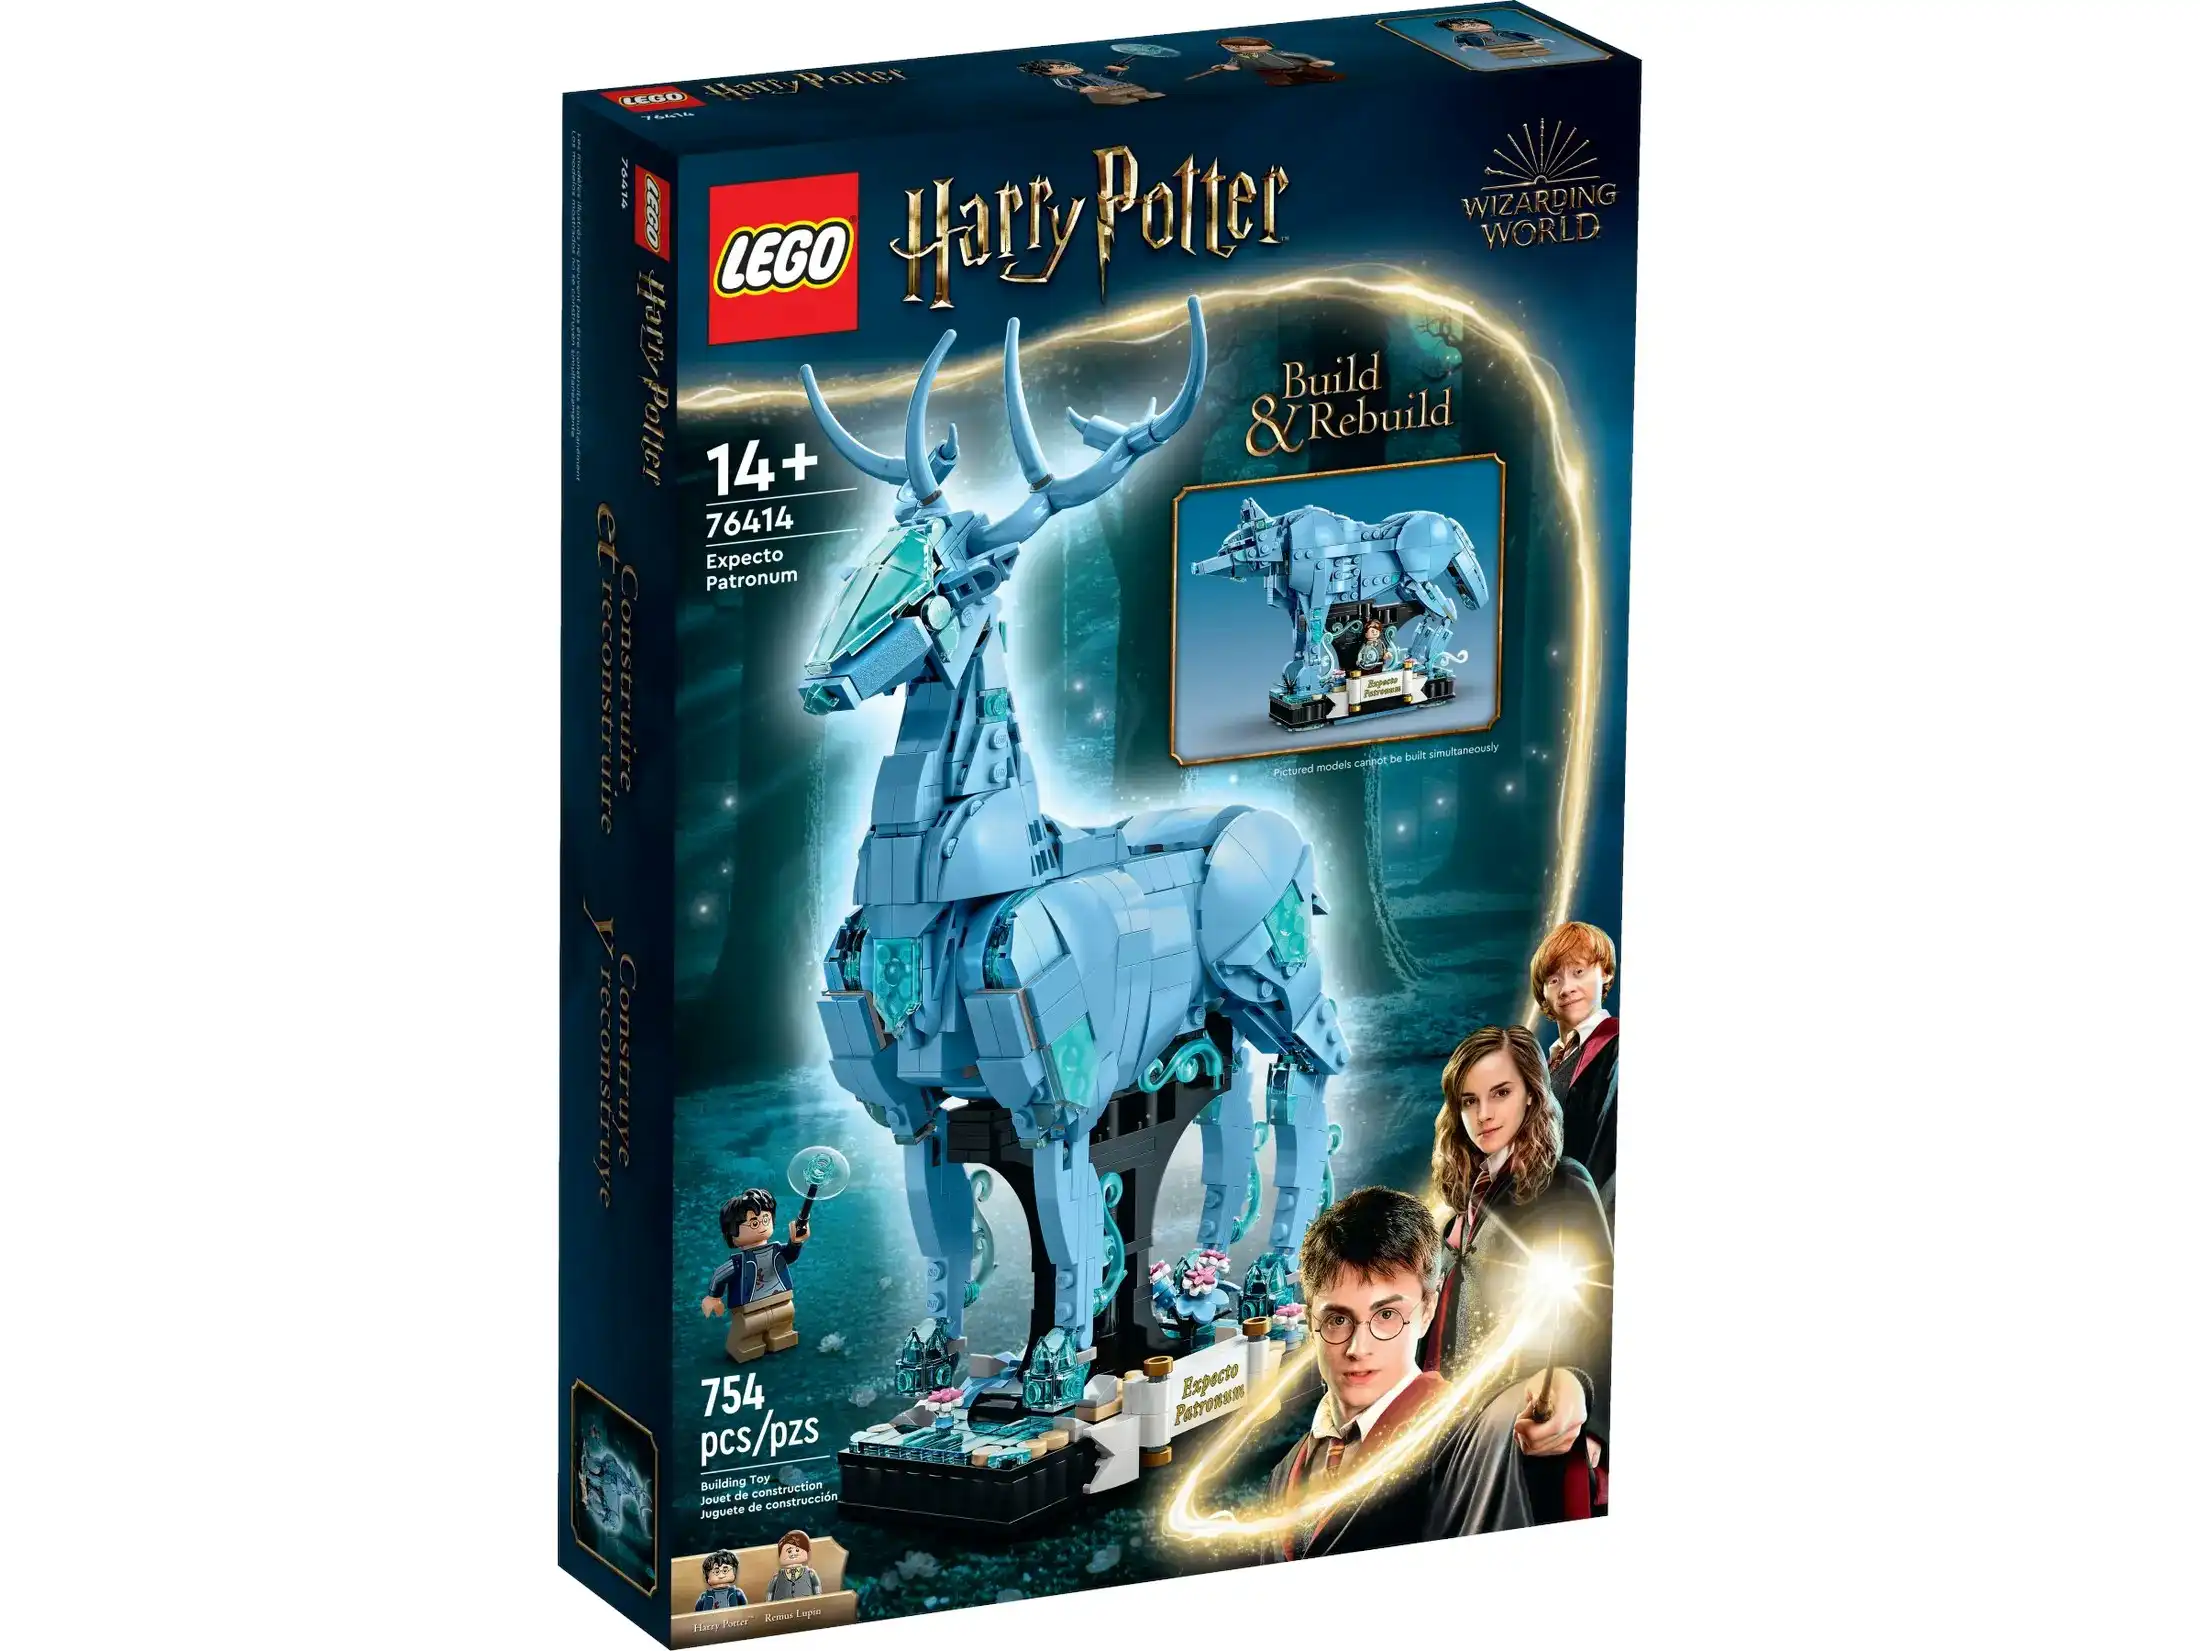 LEGO 76414 Expecto Patronum - Harry Potter